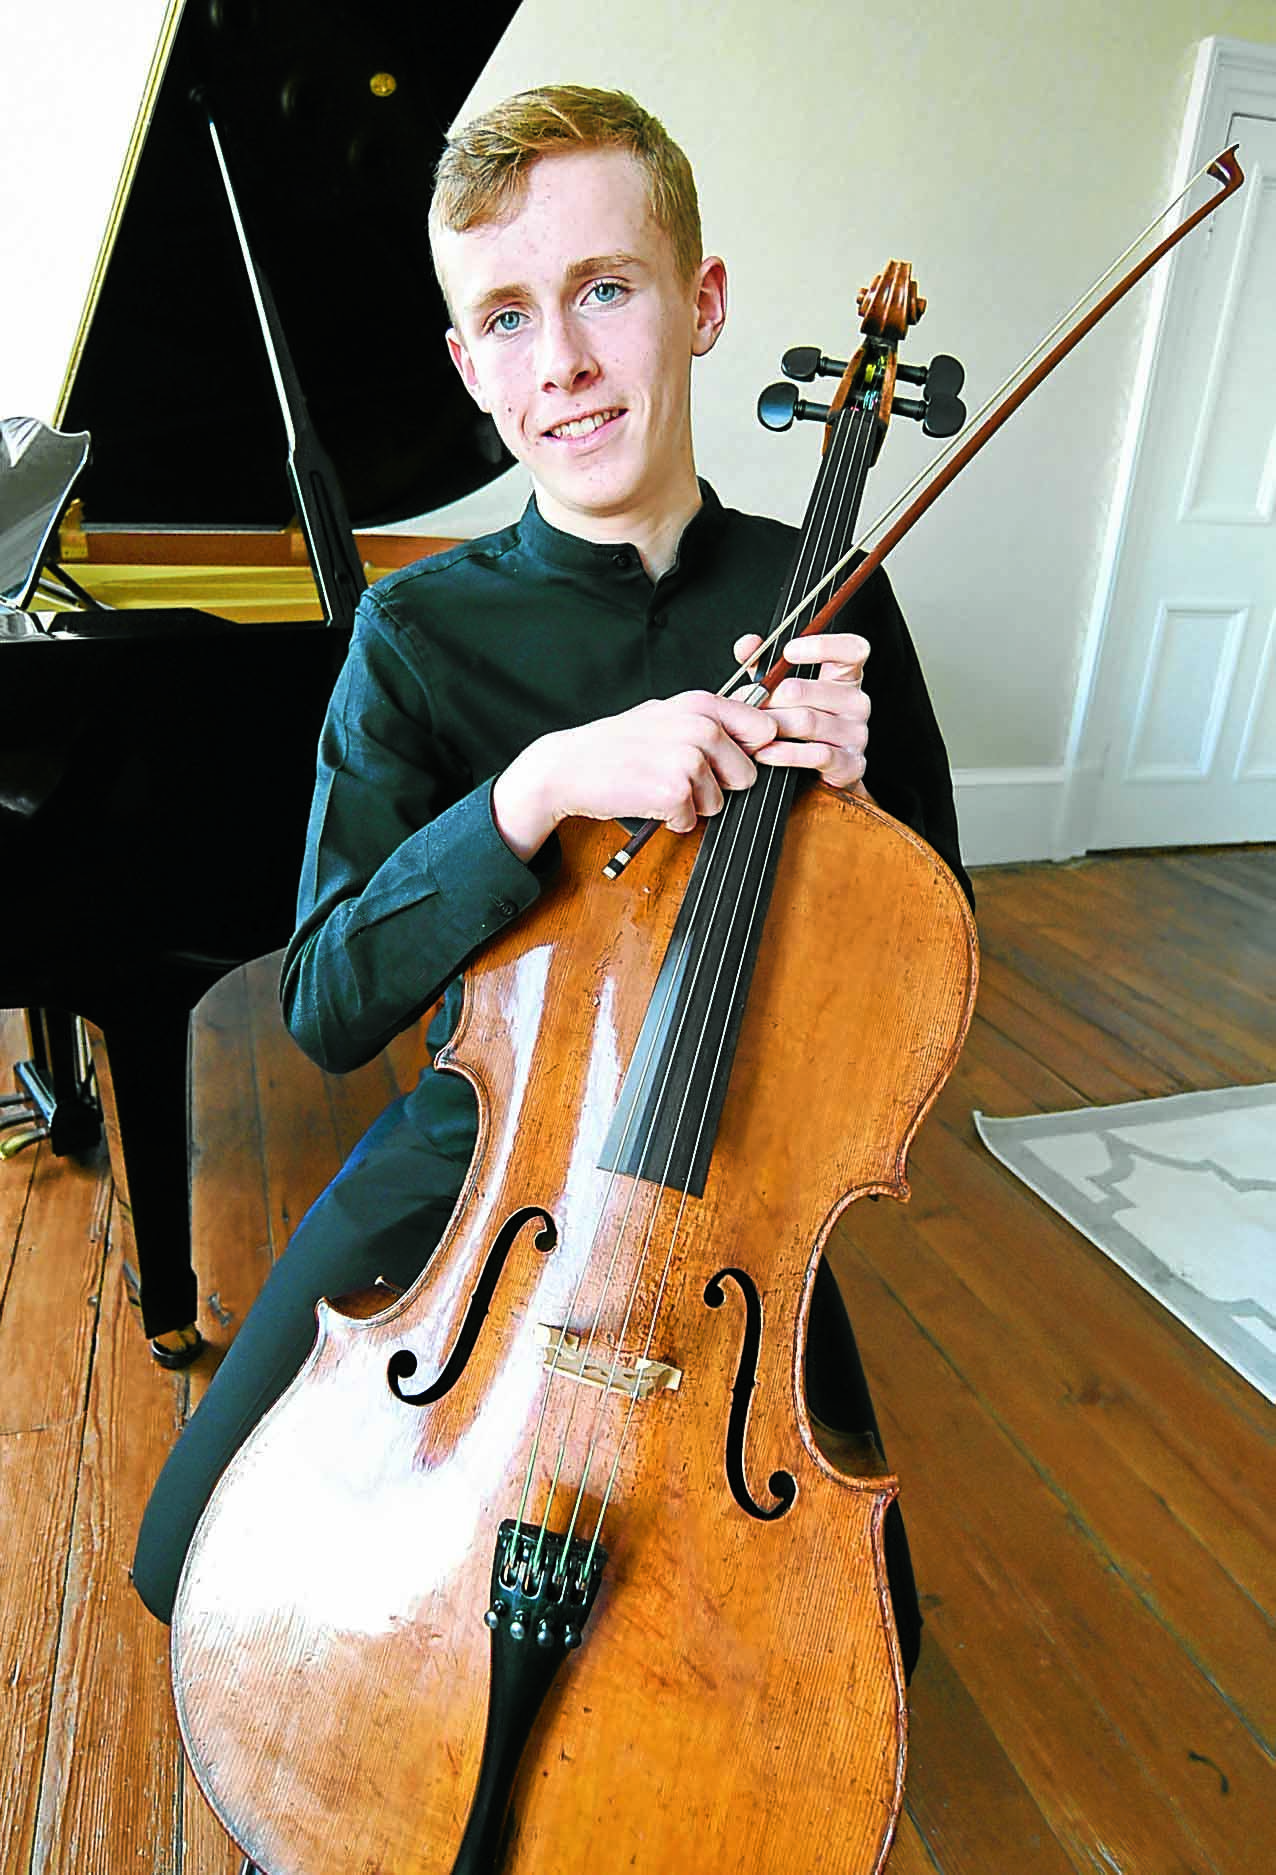 Cello loan honour for musical teen